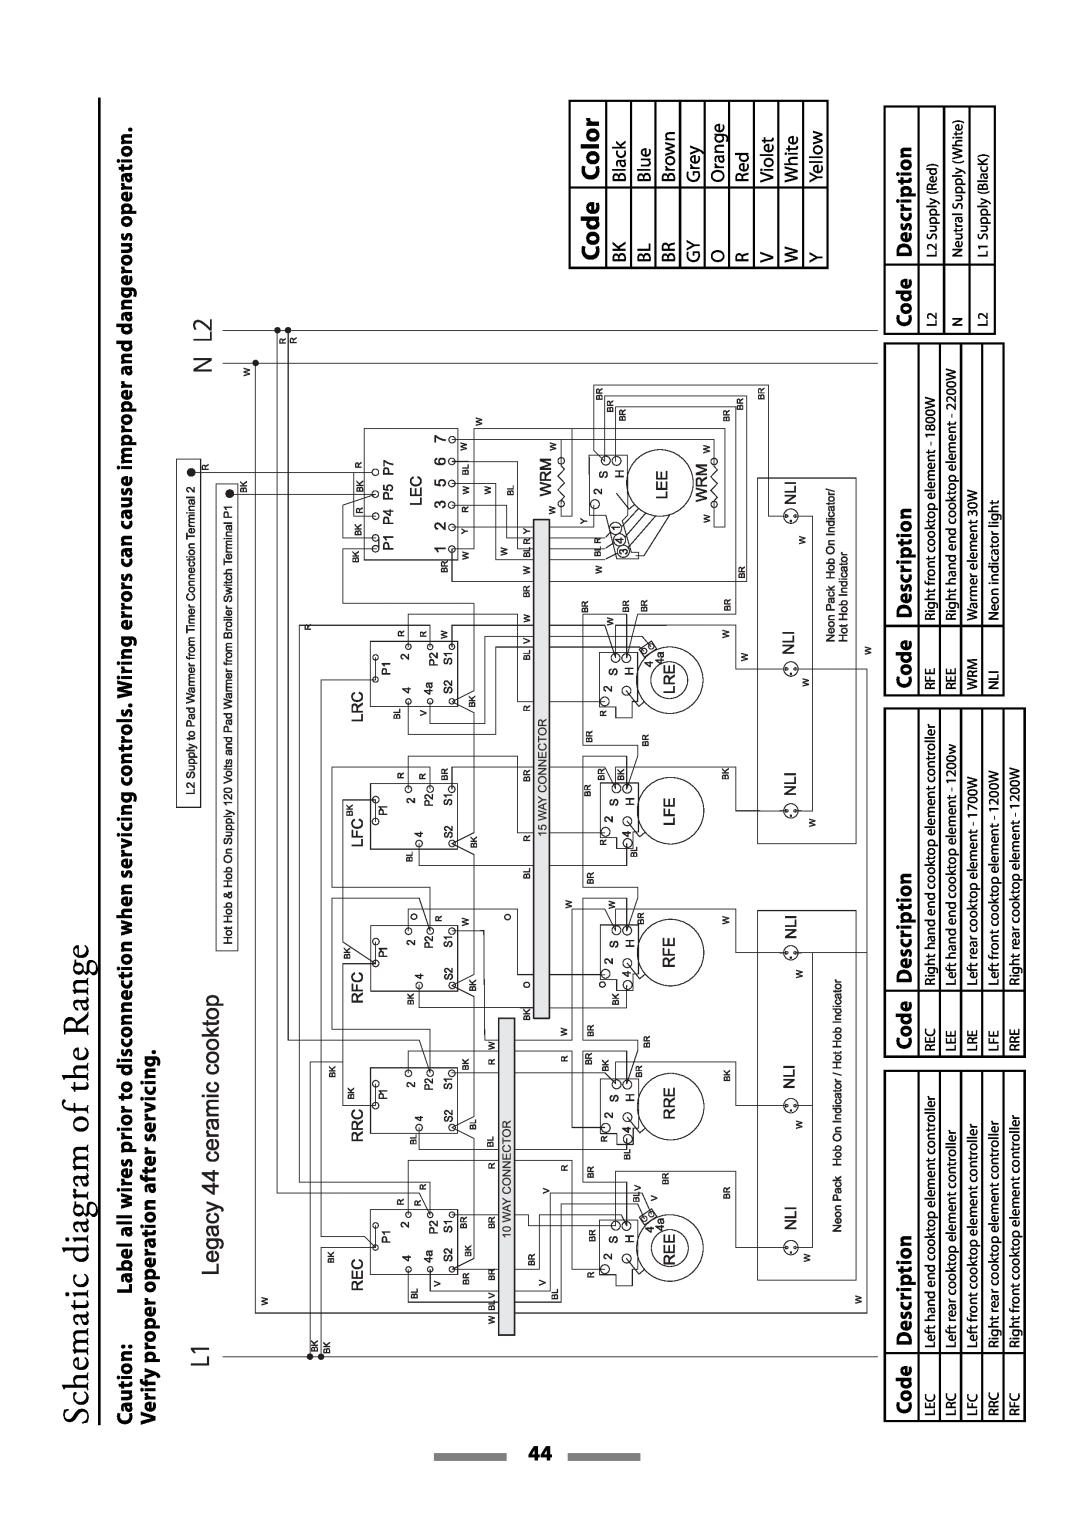 Aga Ranges Legacy 44 installation instructions Schematic diagram of the Range, Code, Color, Description 